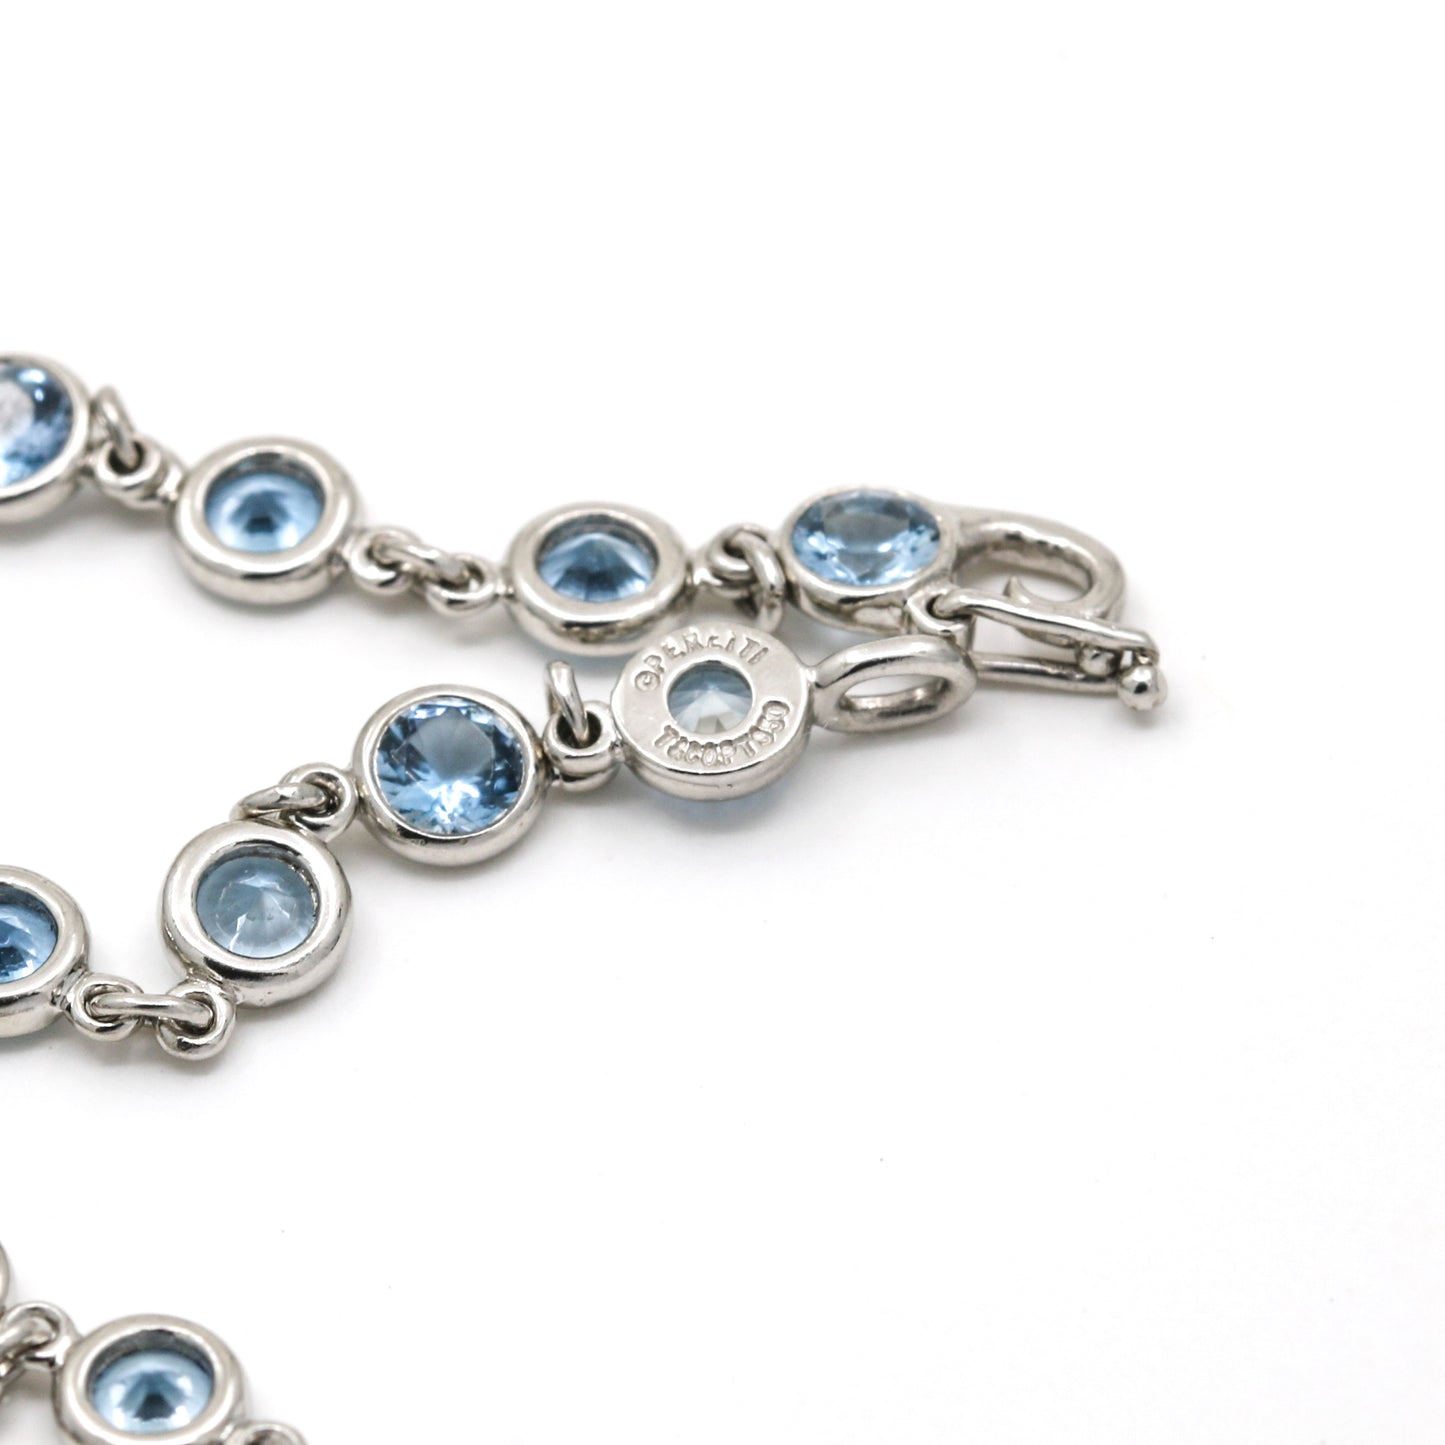 Tiffany & Co. Platinum Elsa Peretti Colors by the Yard Aquamarine Bracelet